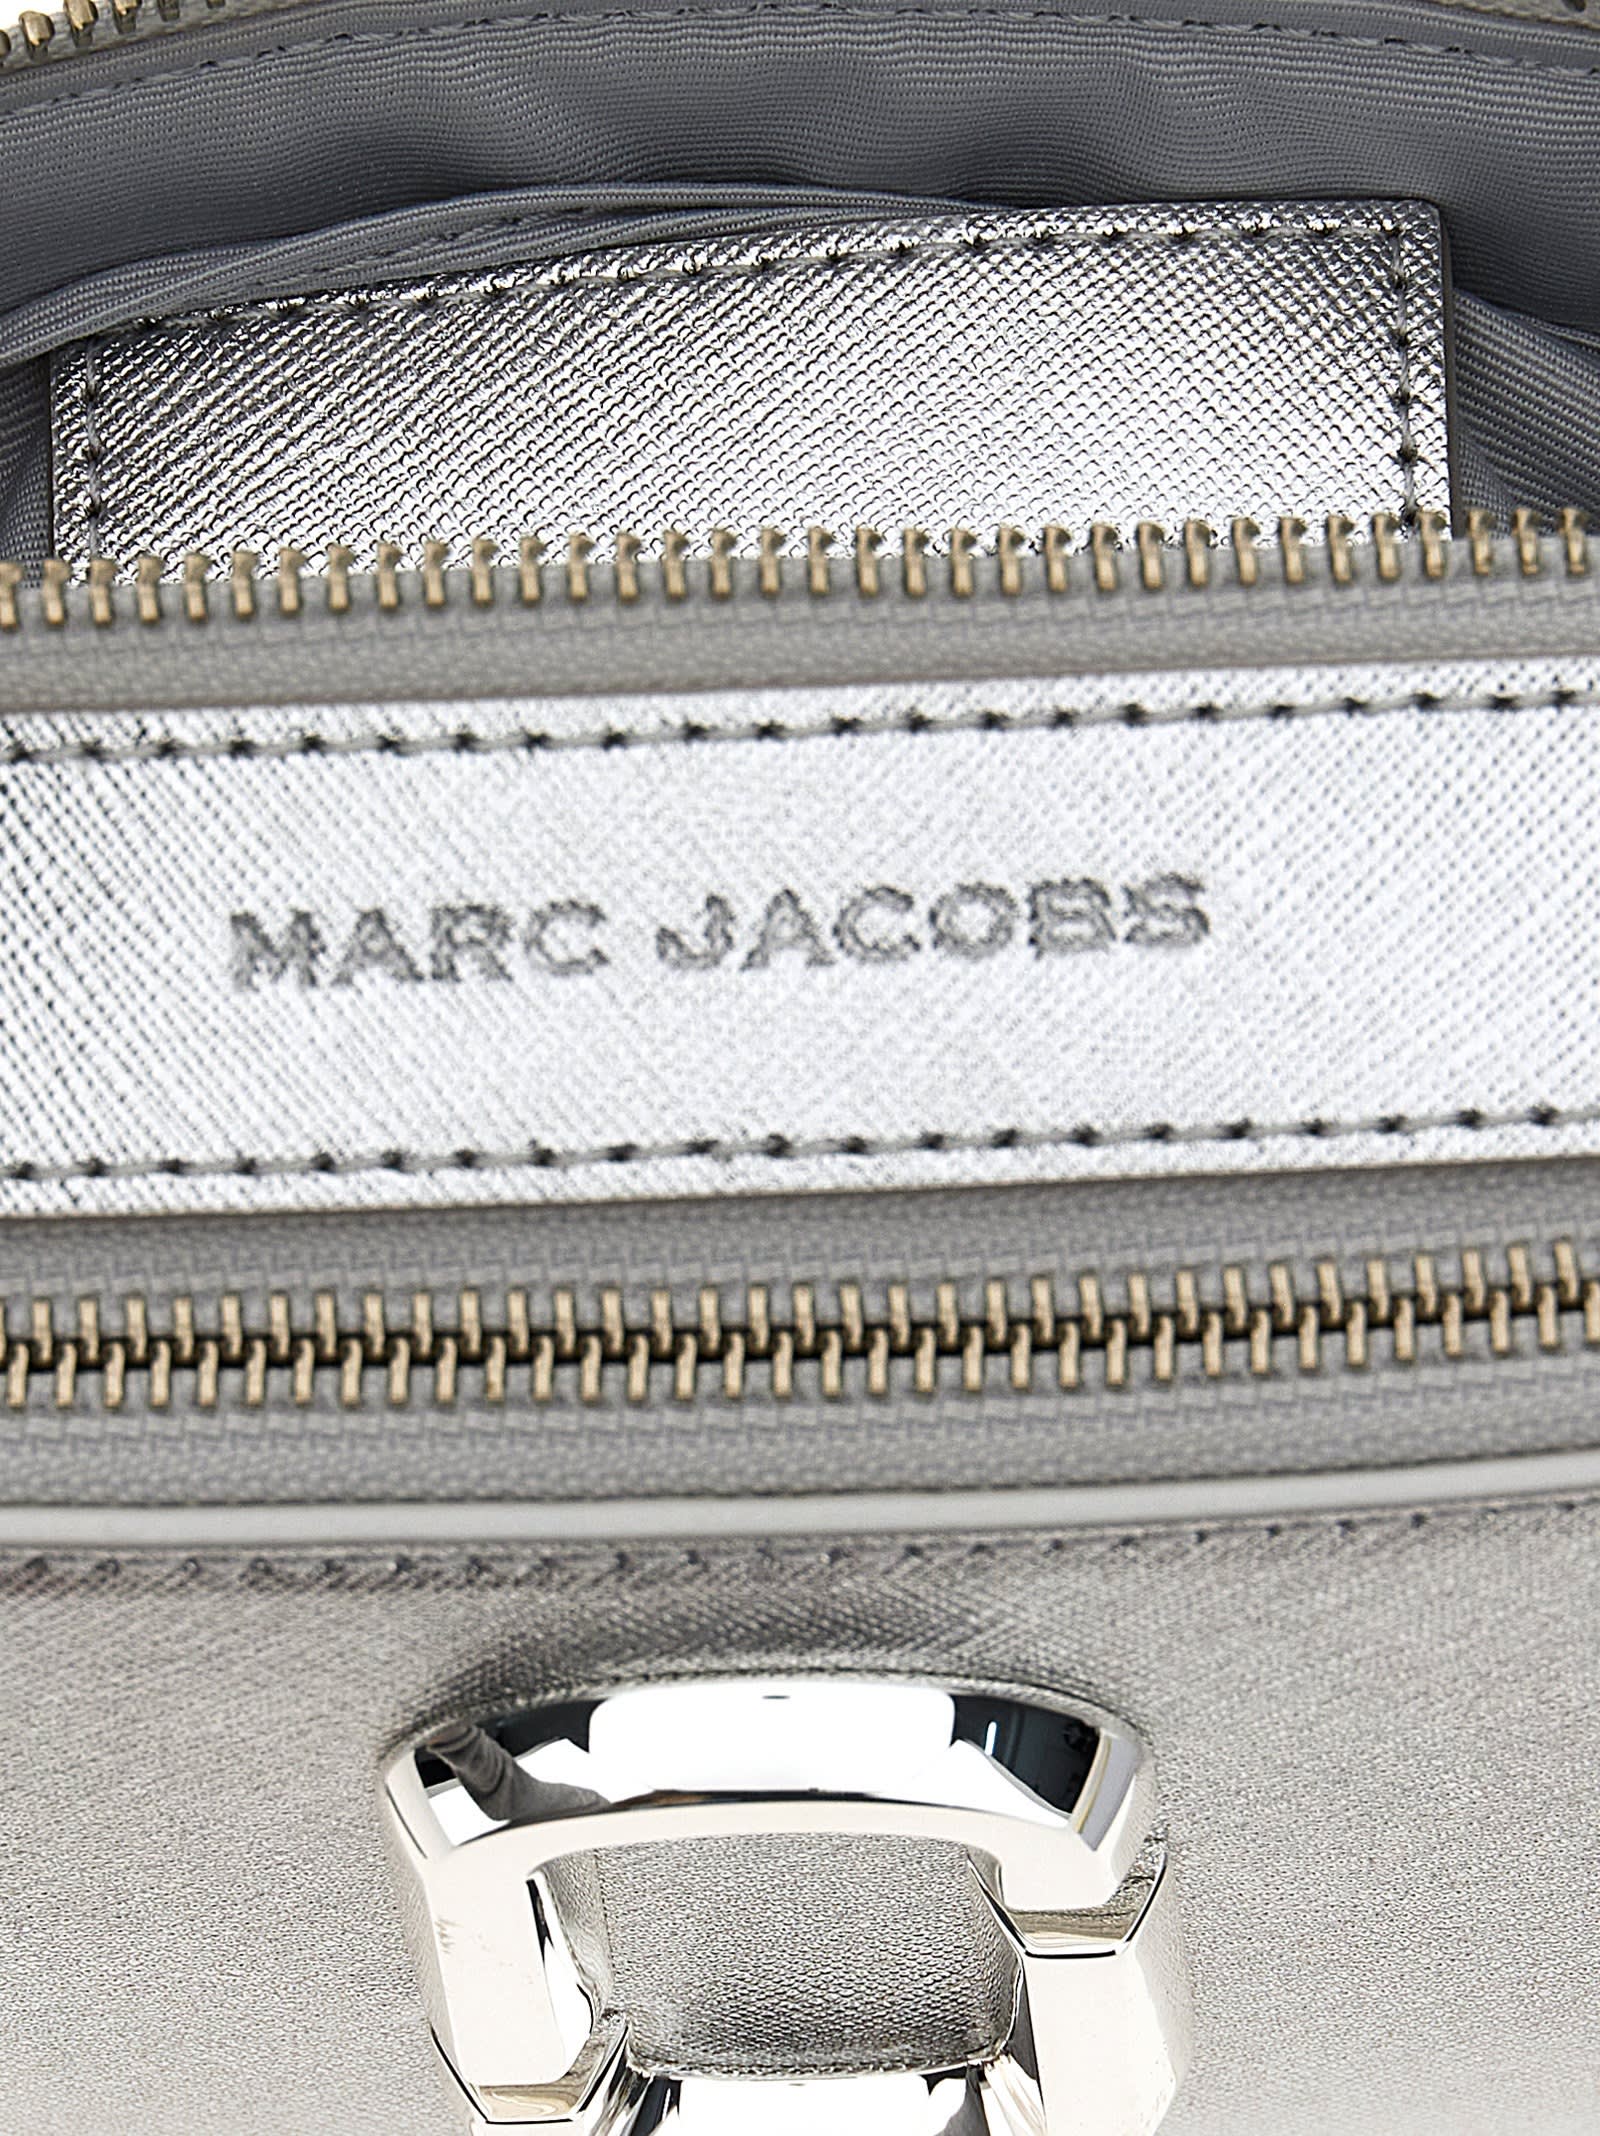 Shop Marc Jacobs The Metallic Snapshot Crossbody Bag In Silver